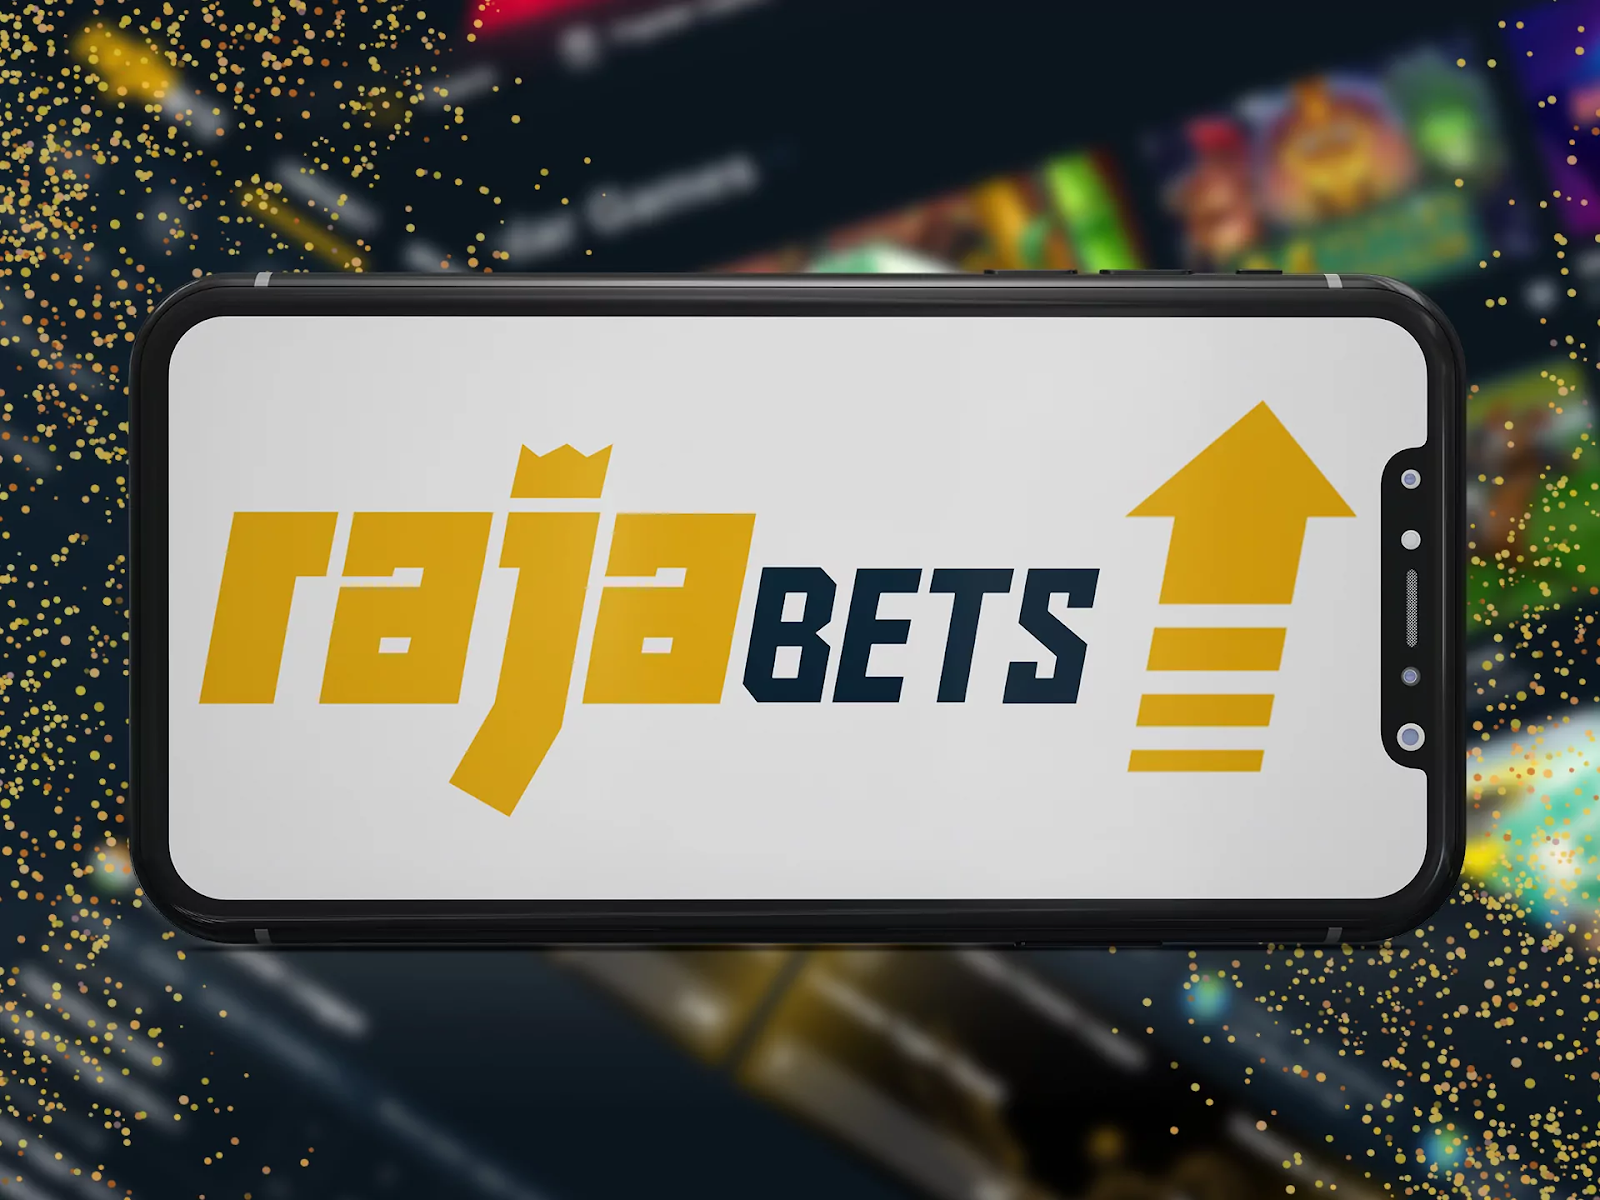 Rajbets Casino and App 2